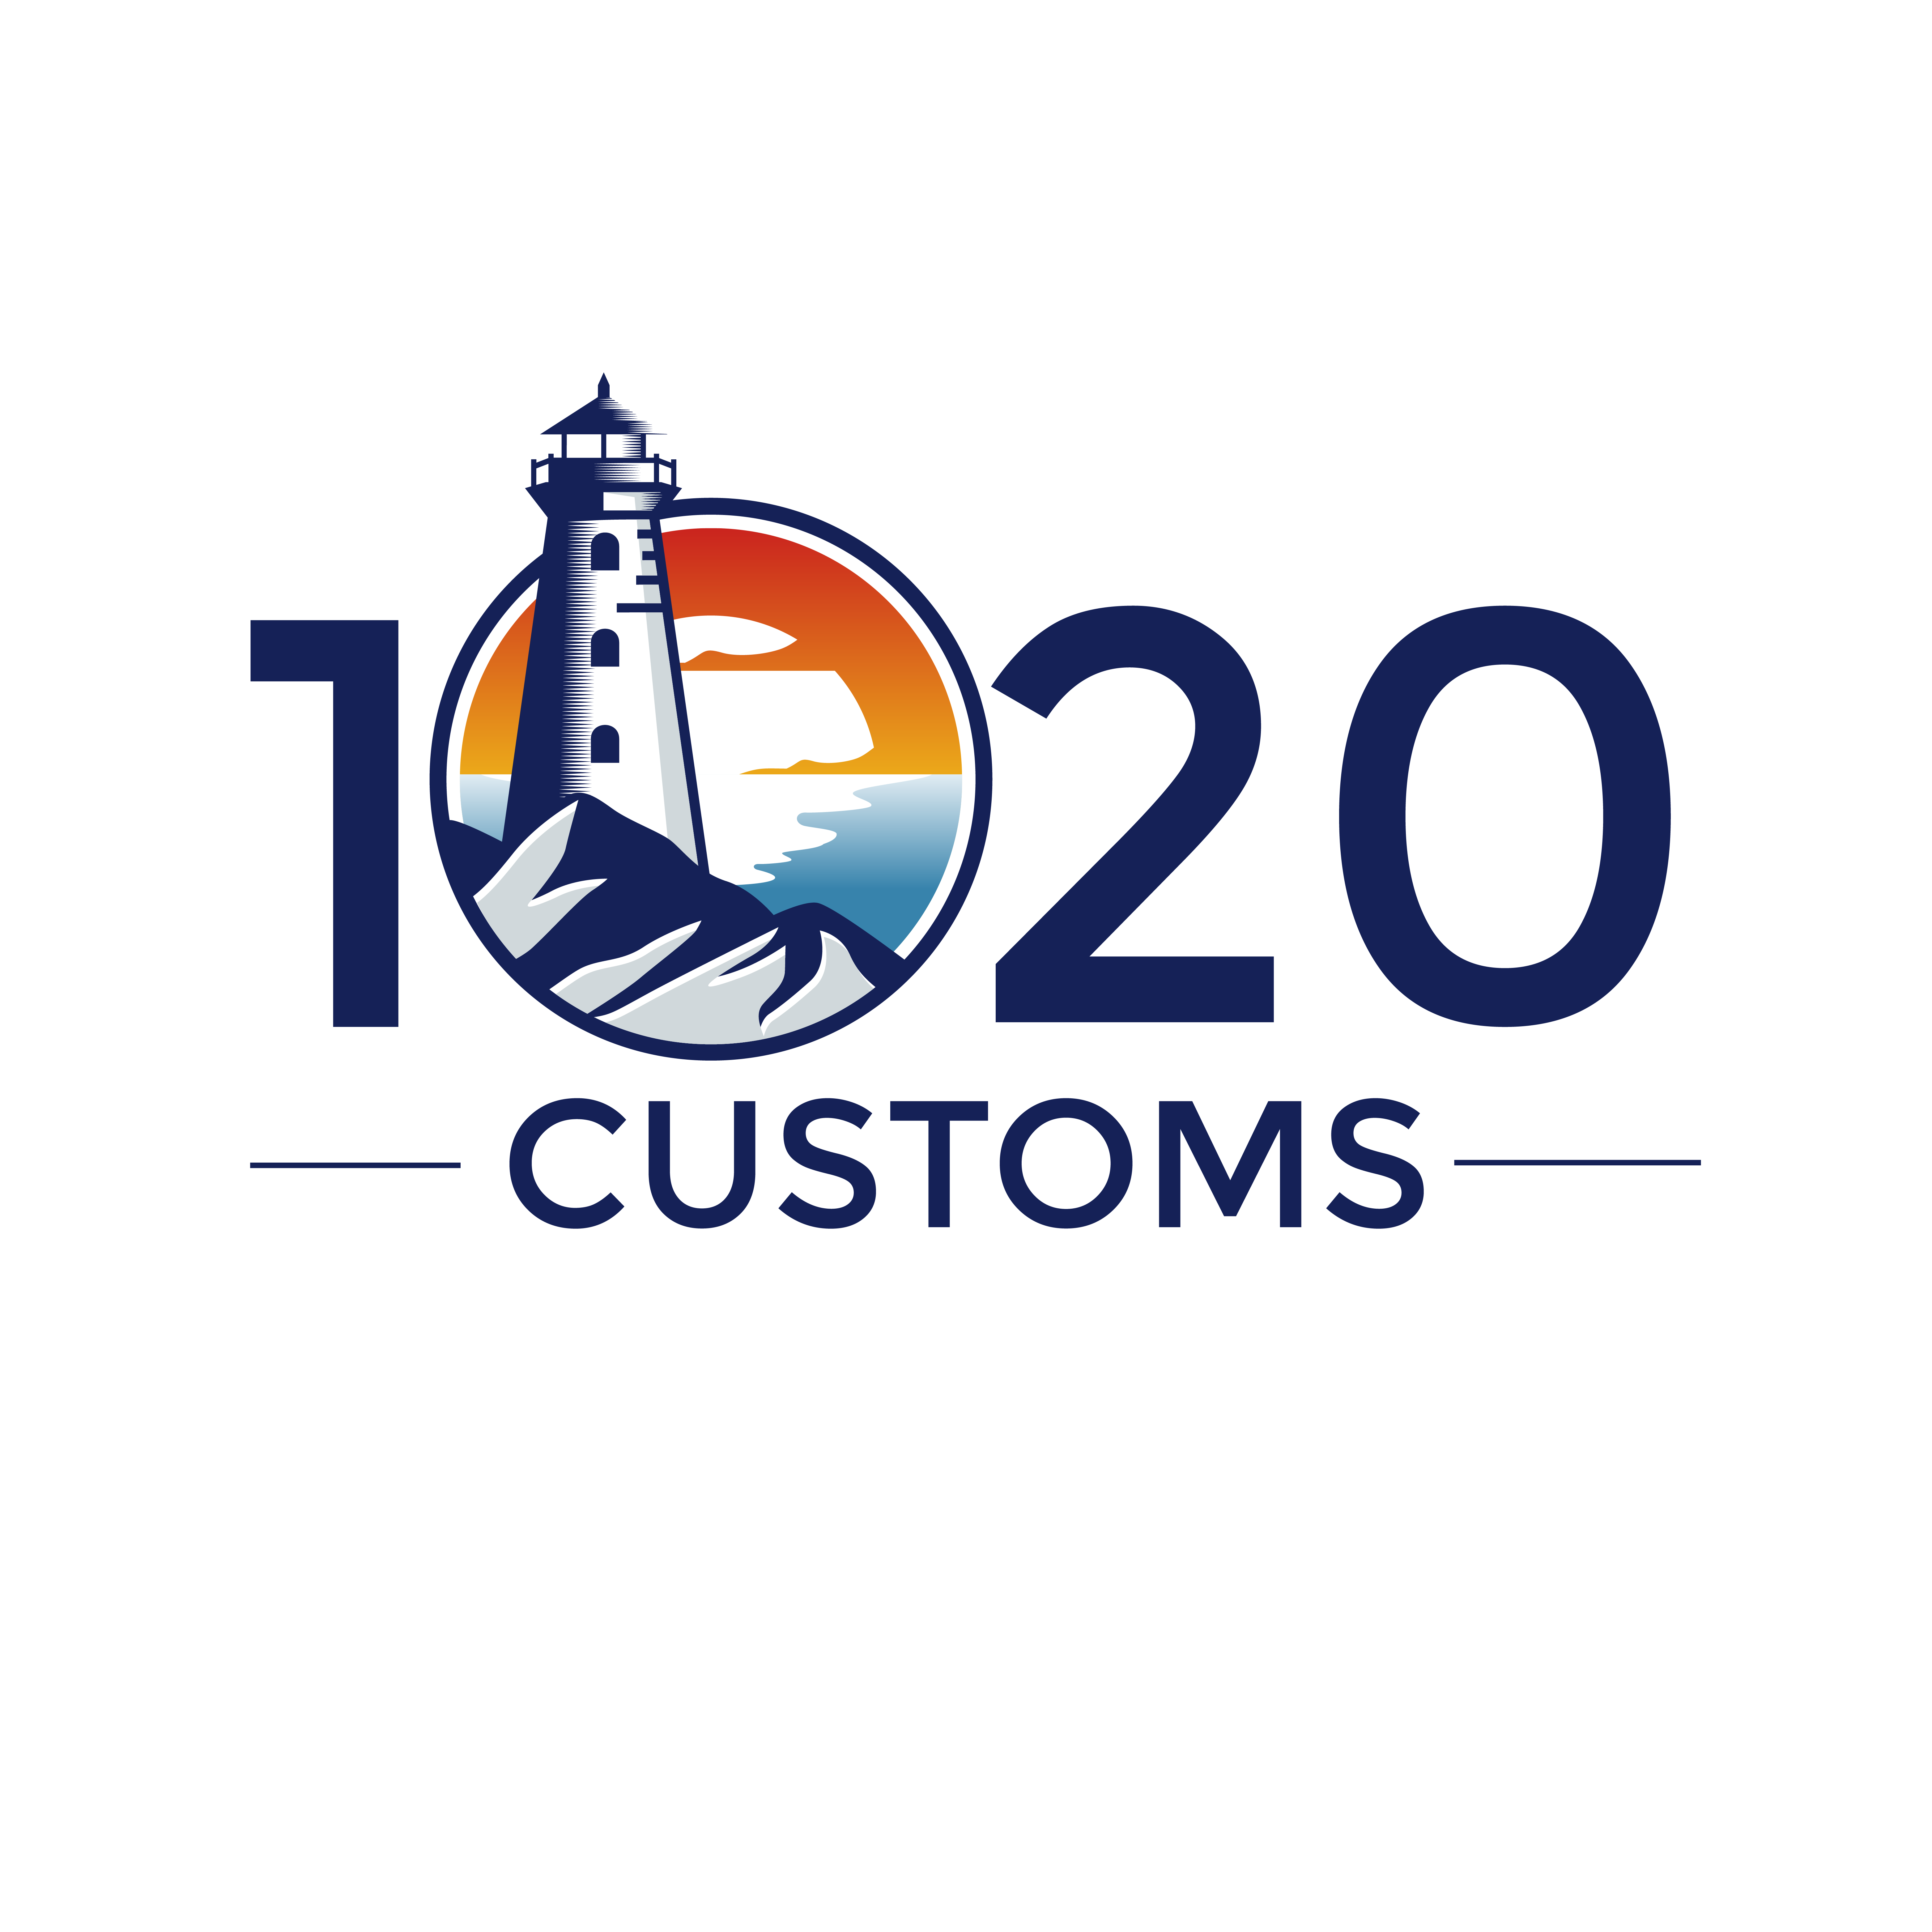 1020 customs